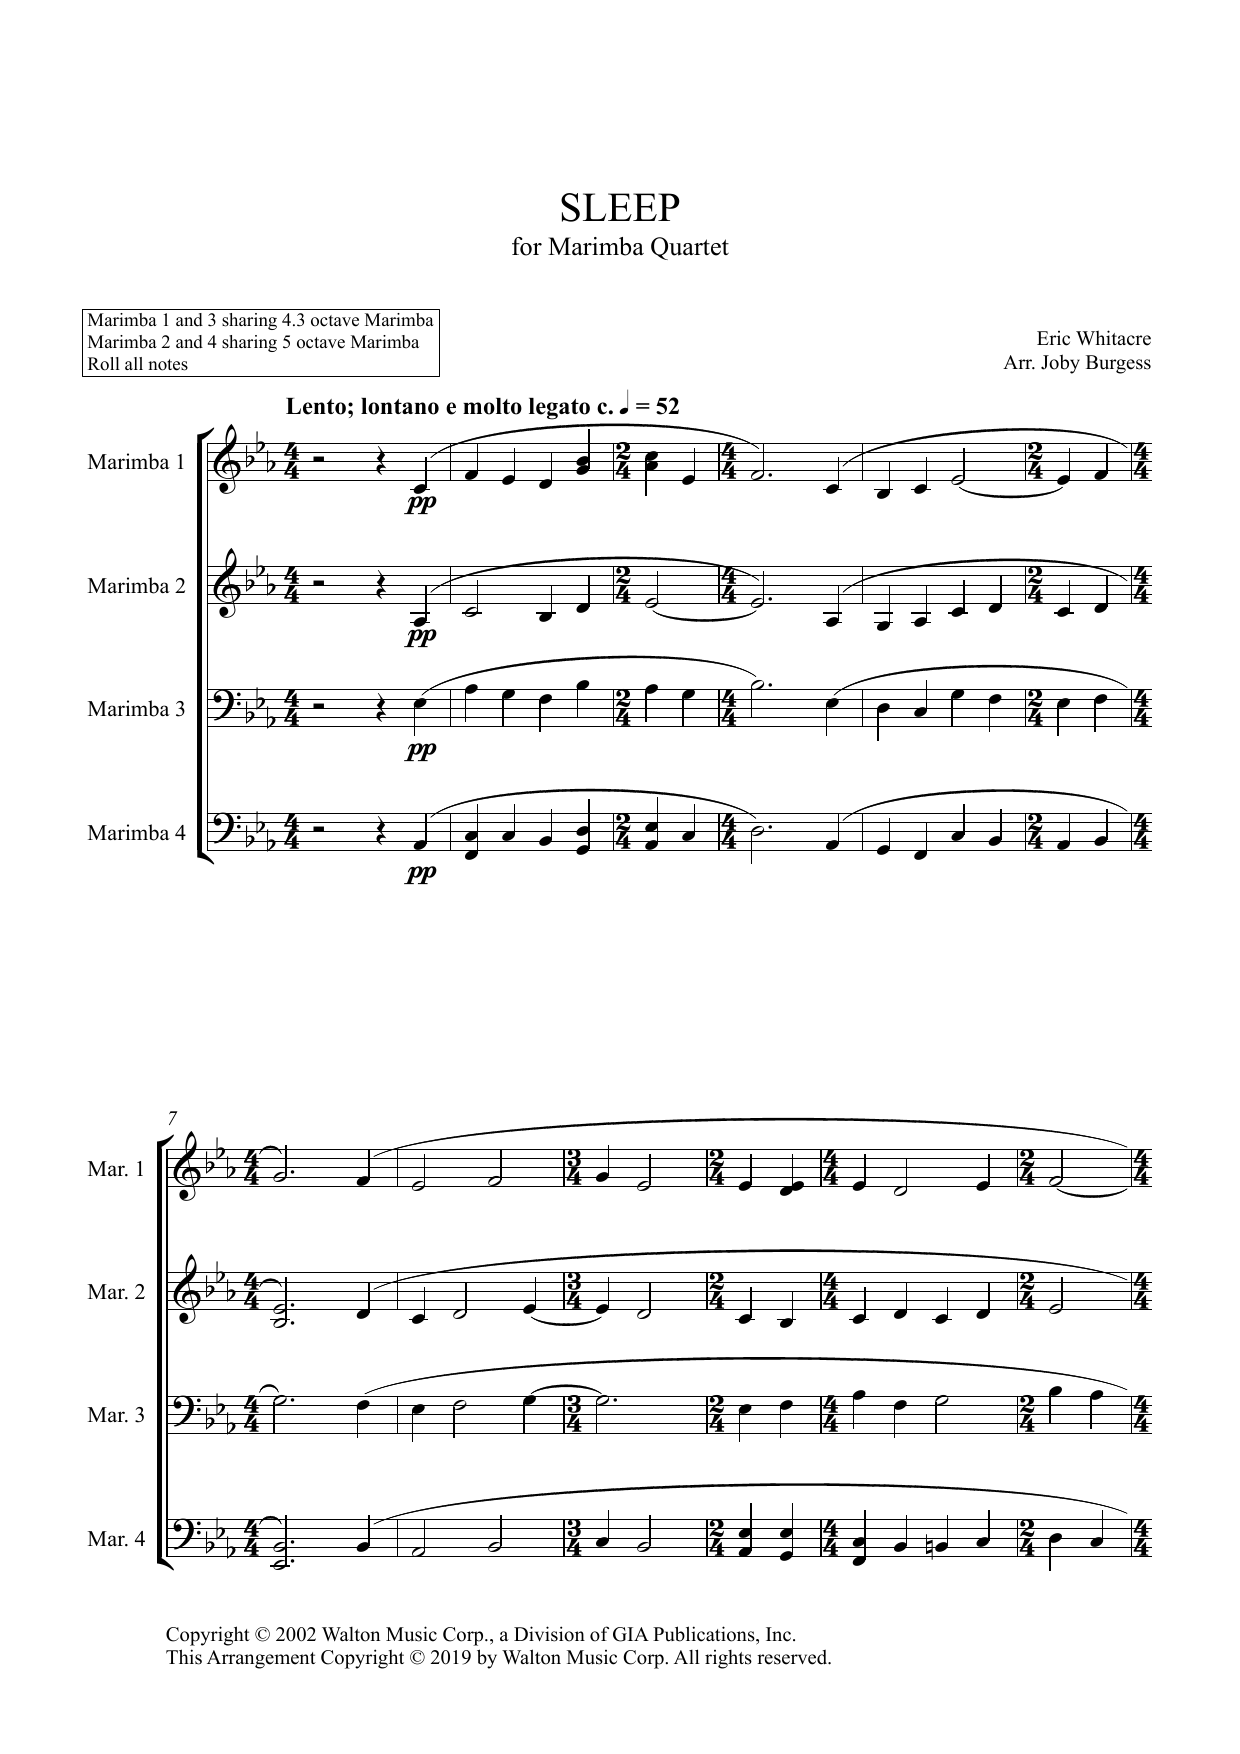 Eric Whitacre Sleep for Marimba Quartet (arr. Joby Burgess) - Full Score sheet music notes and chords arranged for Percussion Ensemble